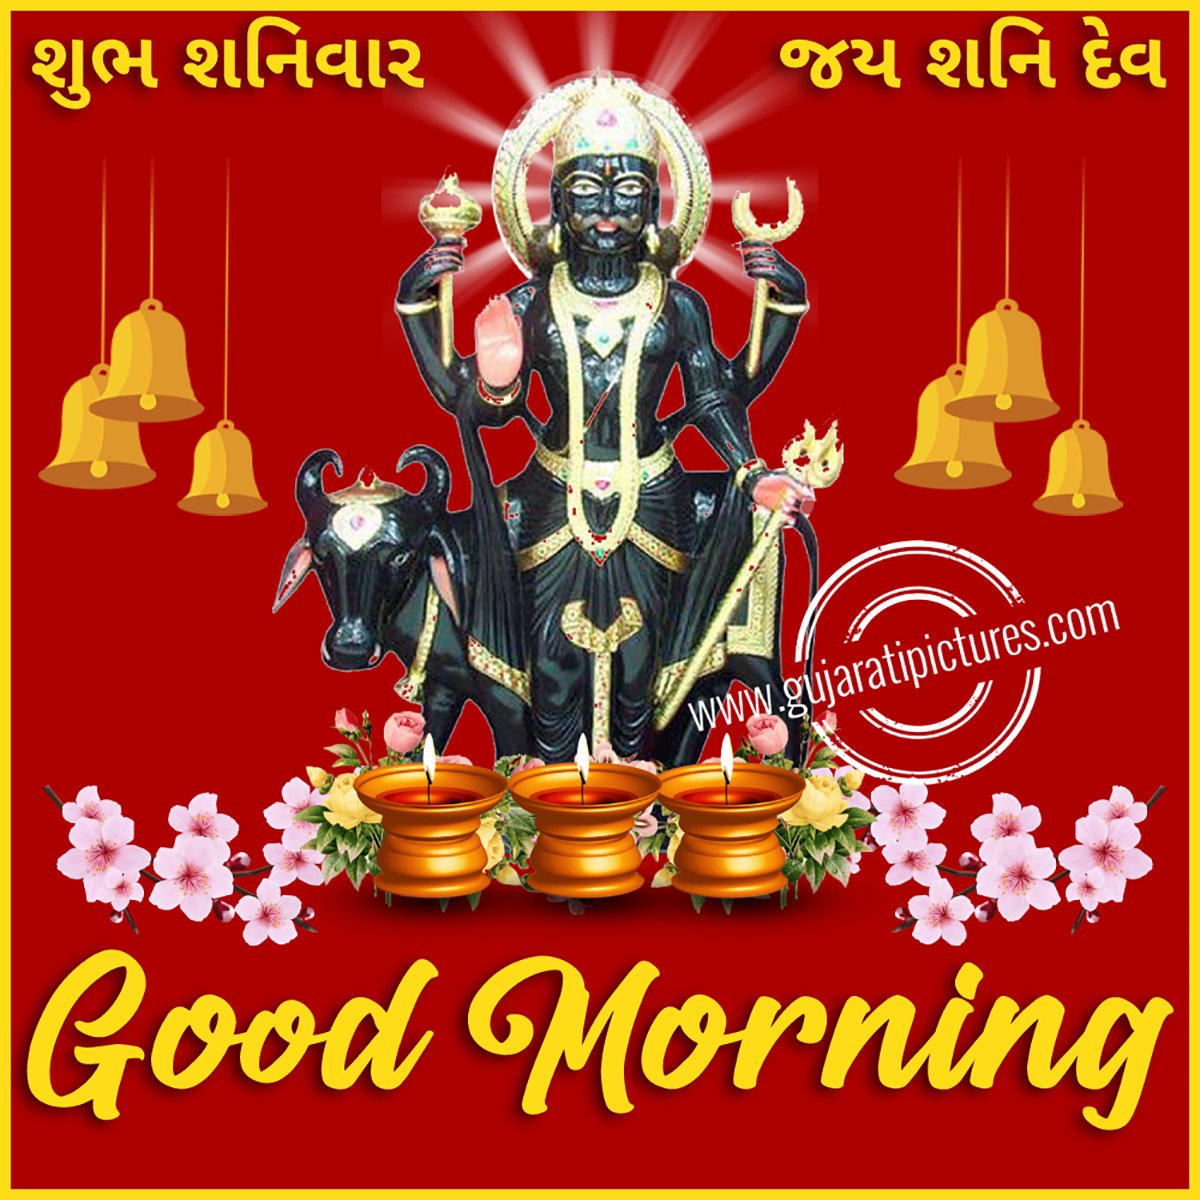 Damandeep Singh - Gujarati Pictures – Website Dedicated to ...